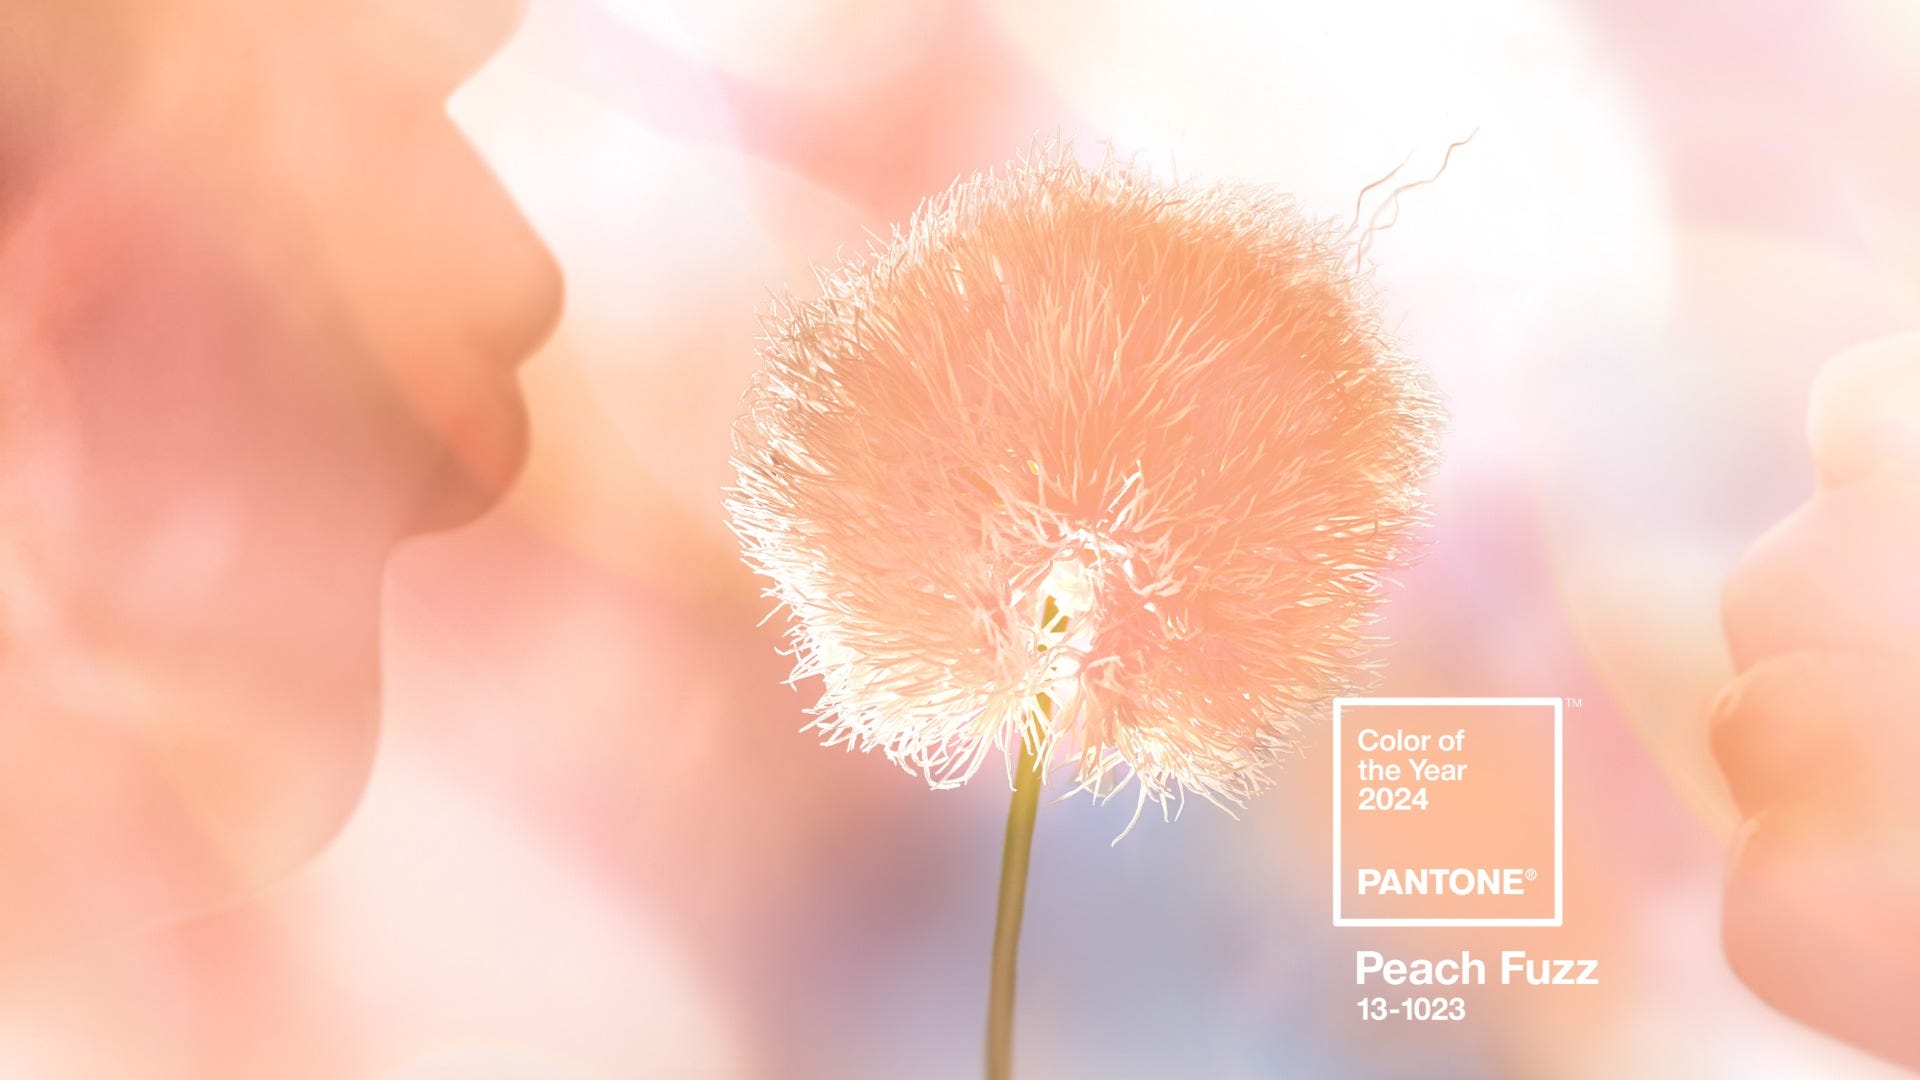 PANTONE Peach Fuzz